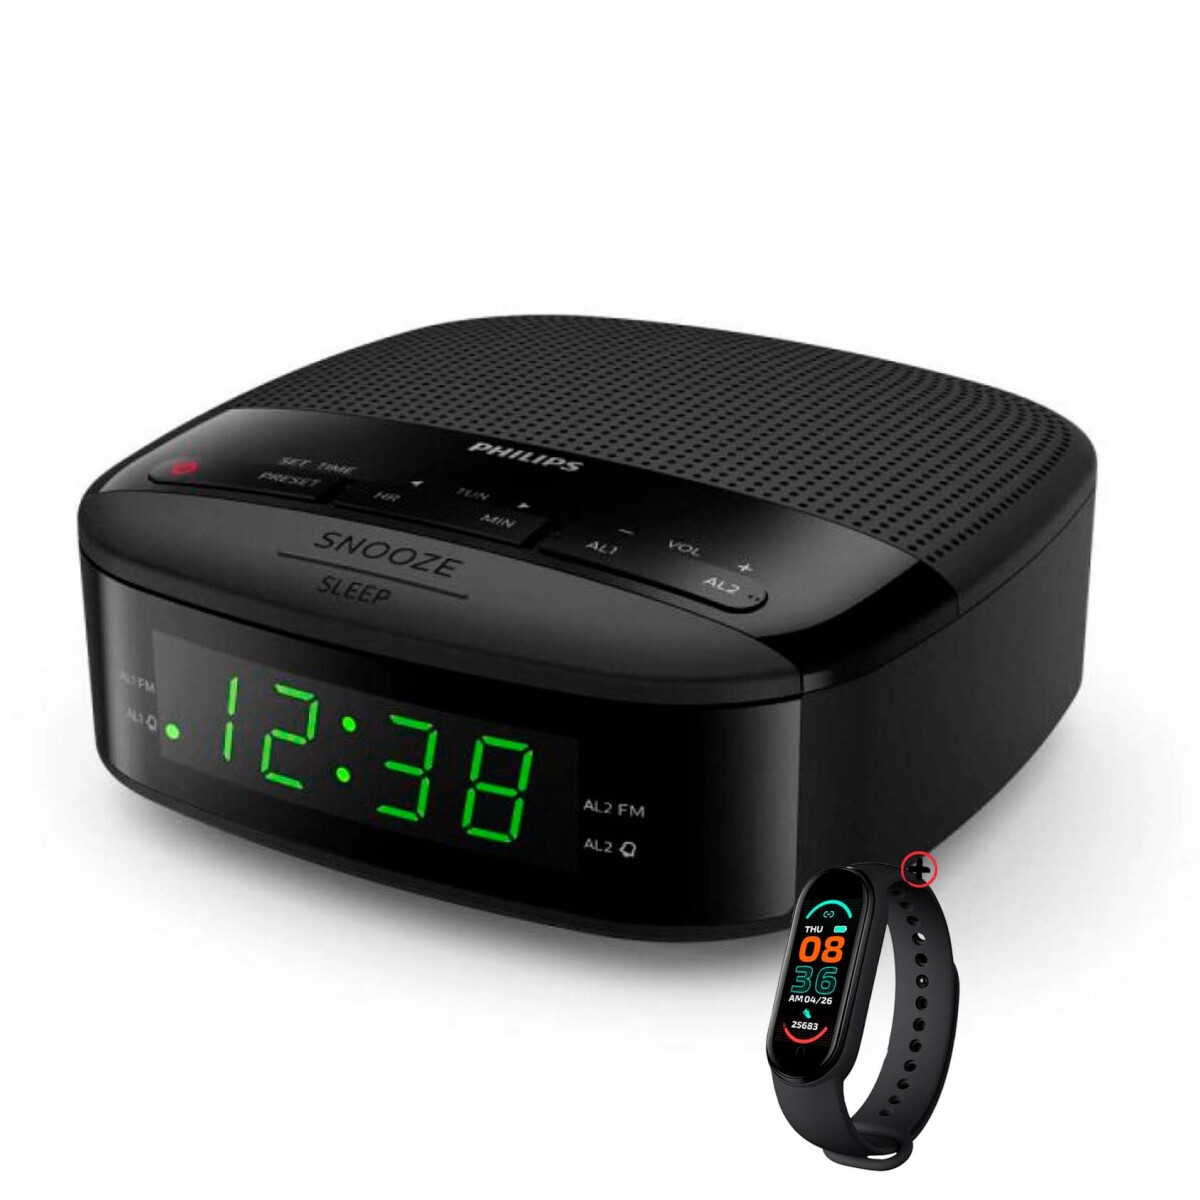 Radio Reloj Philips Digital Tar3502 Alarma Dual Sintonizador + Smartwatch 